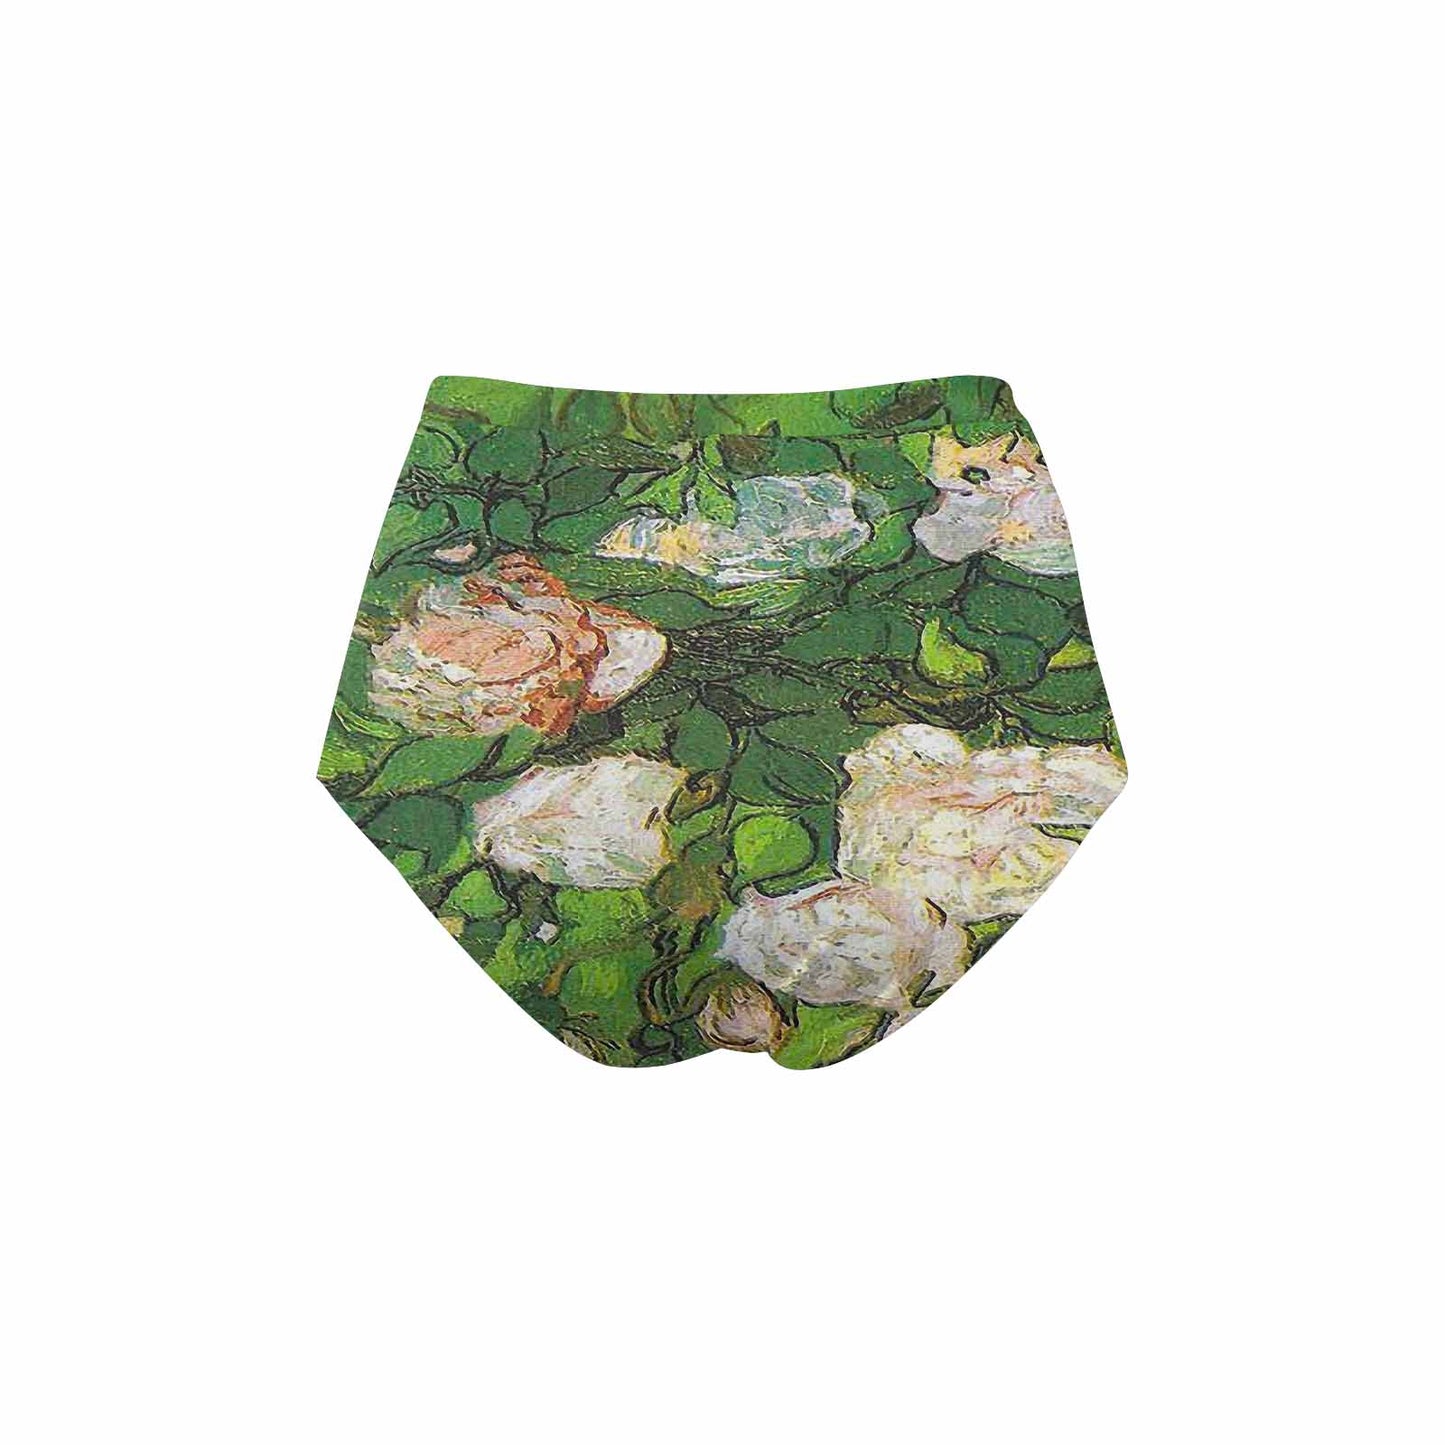 Vintage floral High waist bikini bottom, Design 06